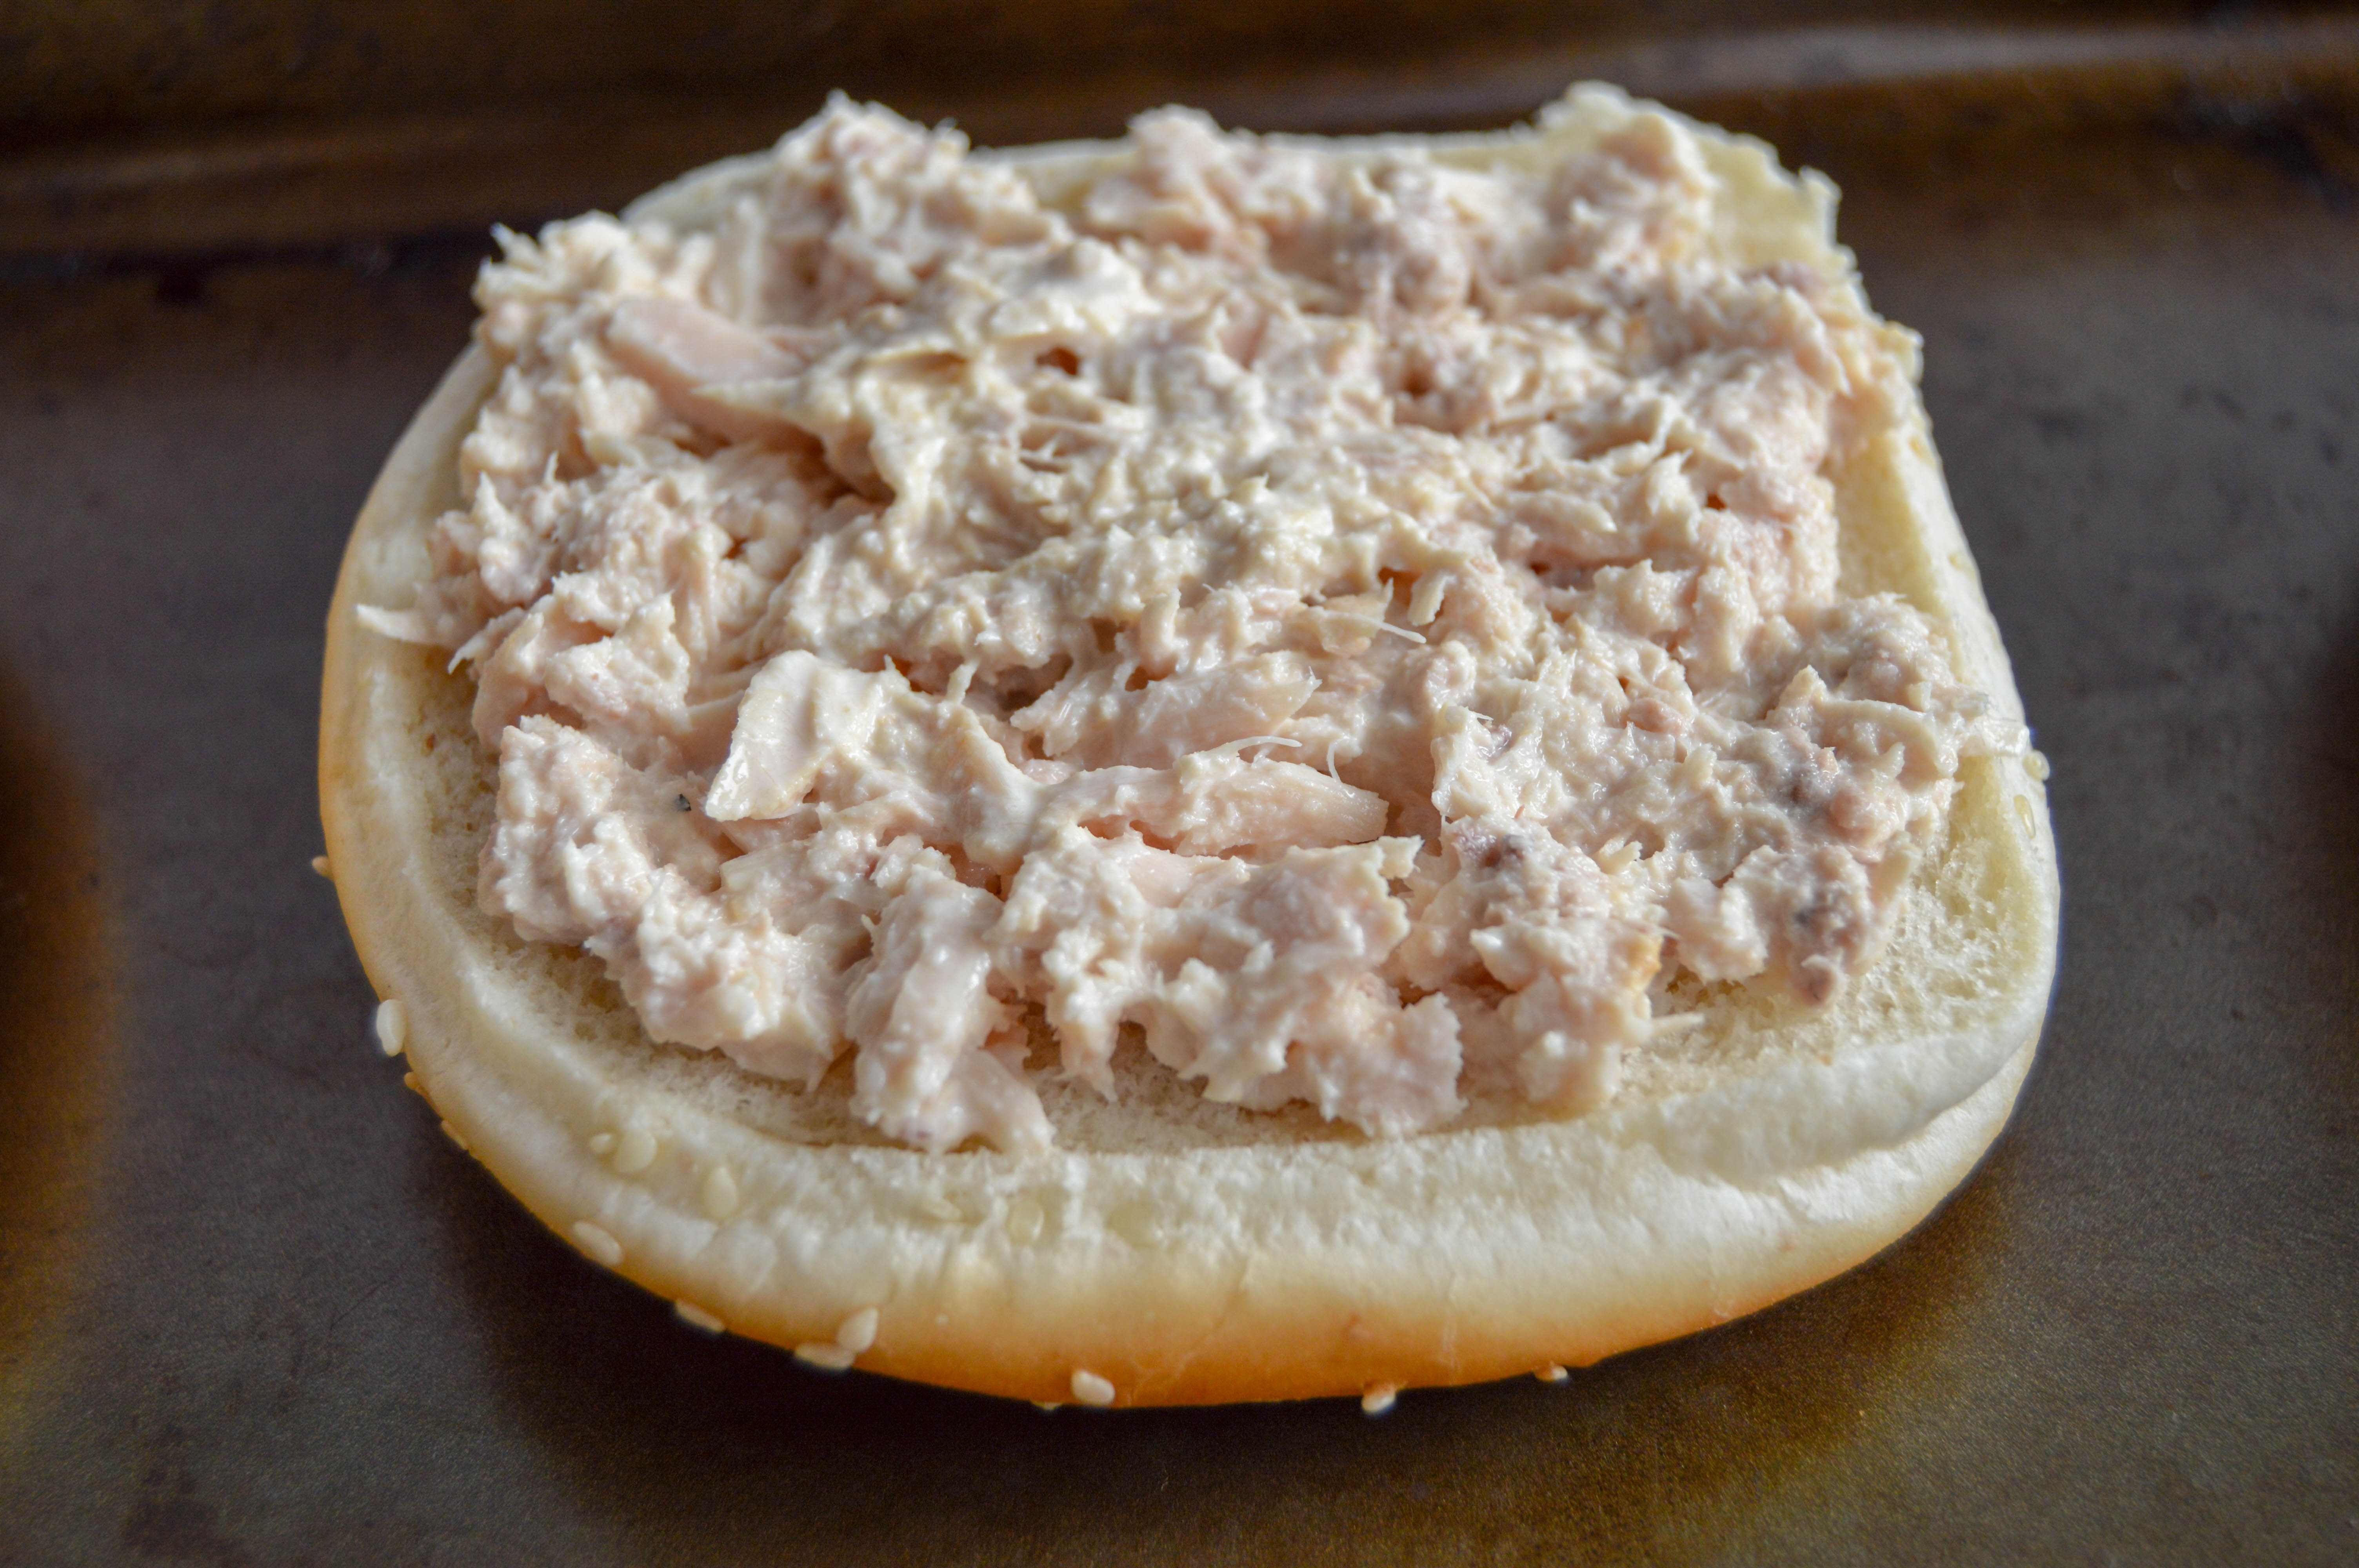 Add the tuna on the bunwiches.